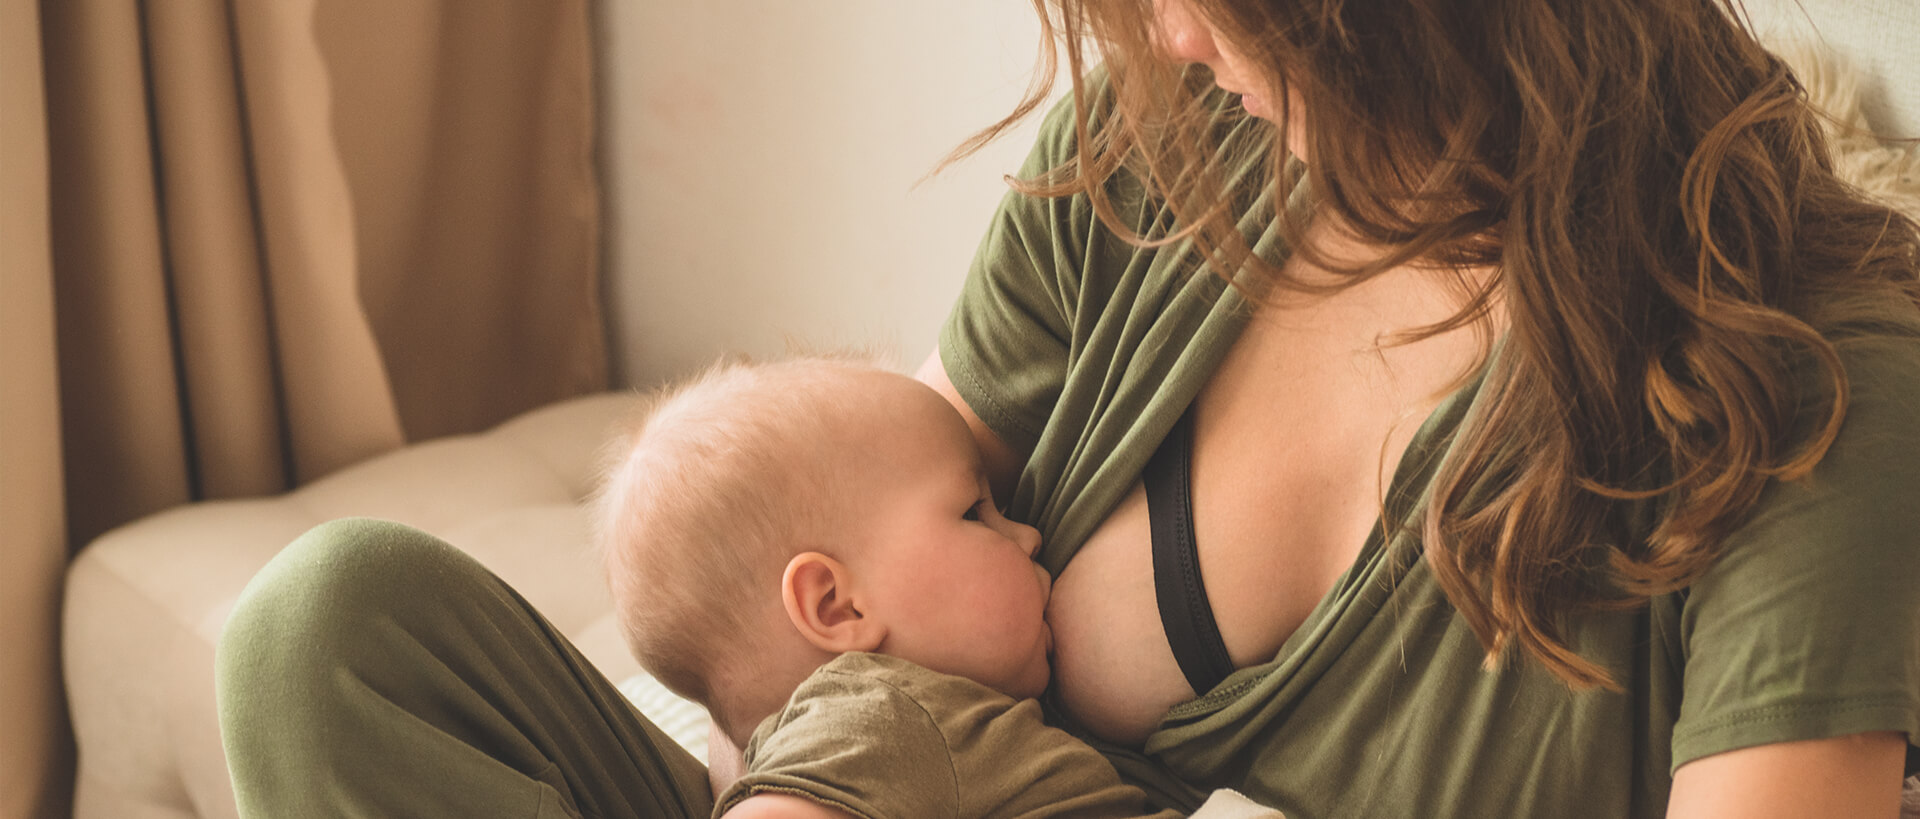 woman in green top breastfeeding baby